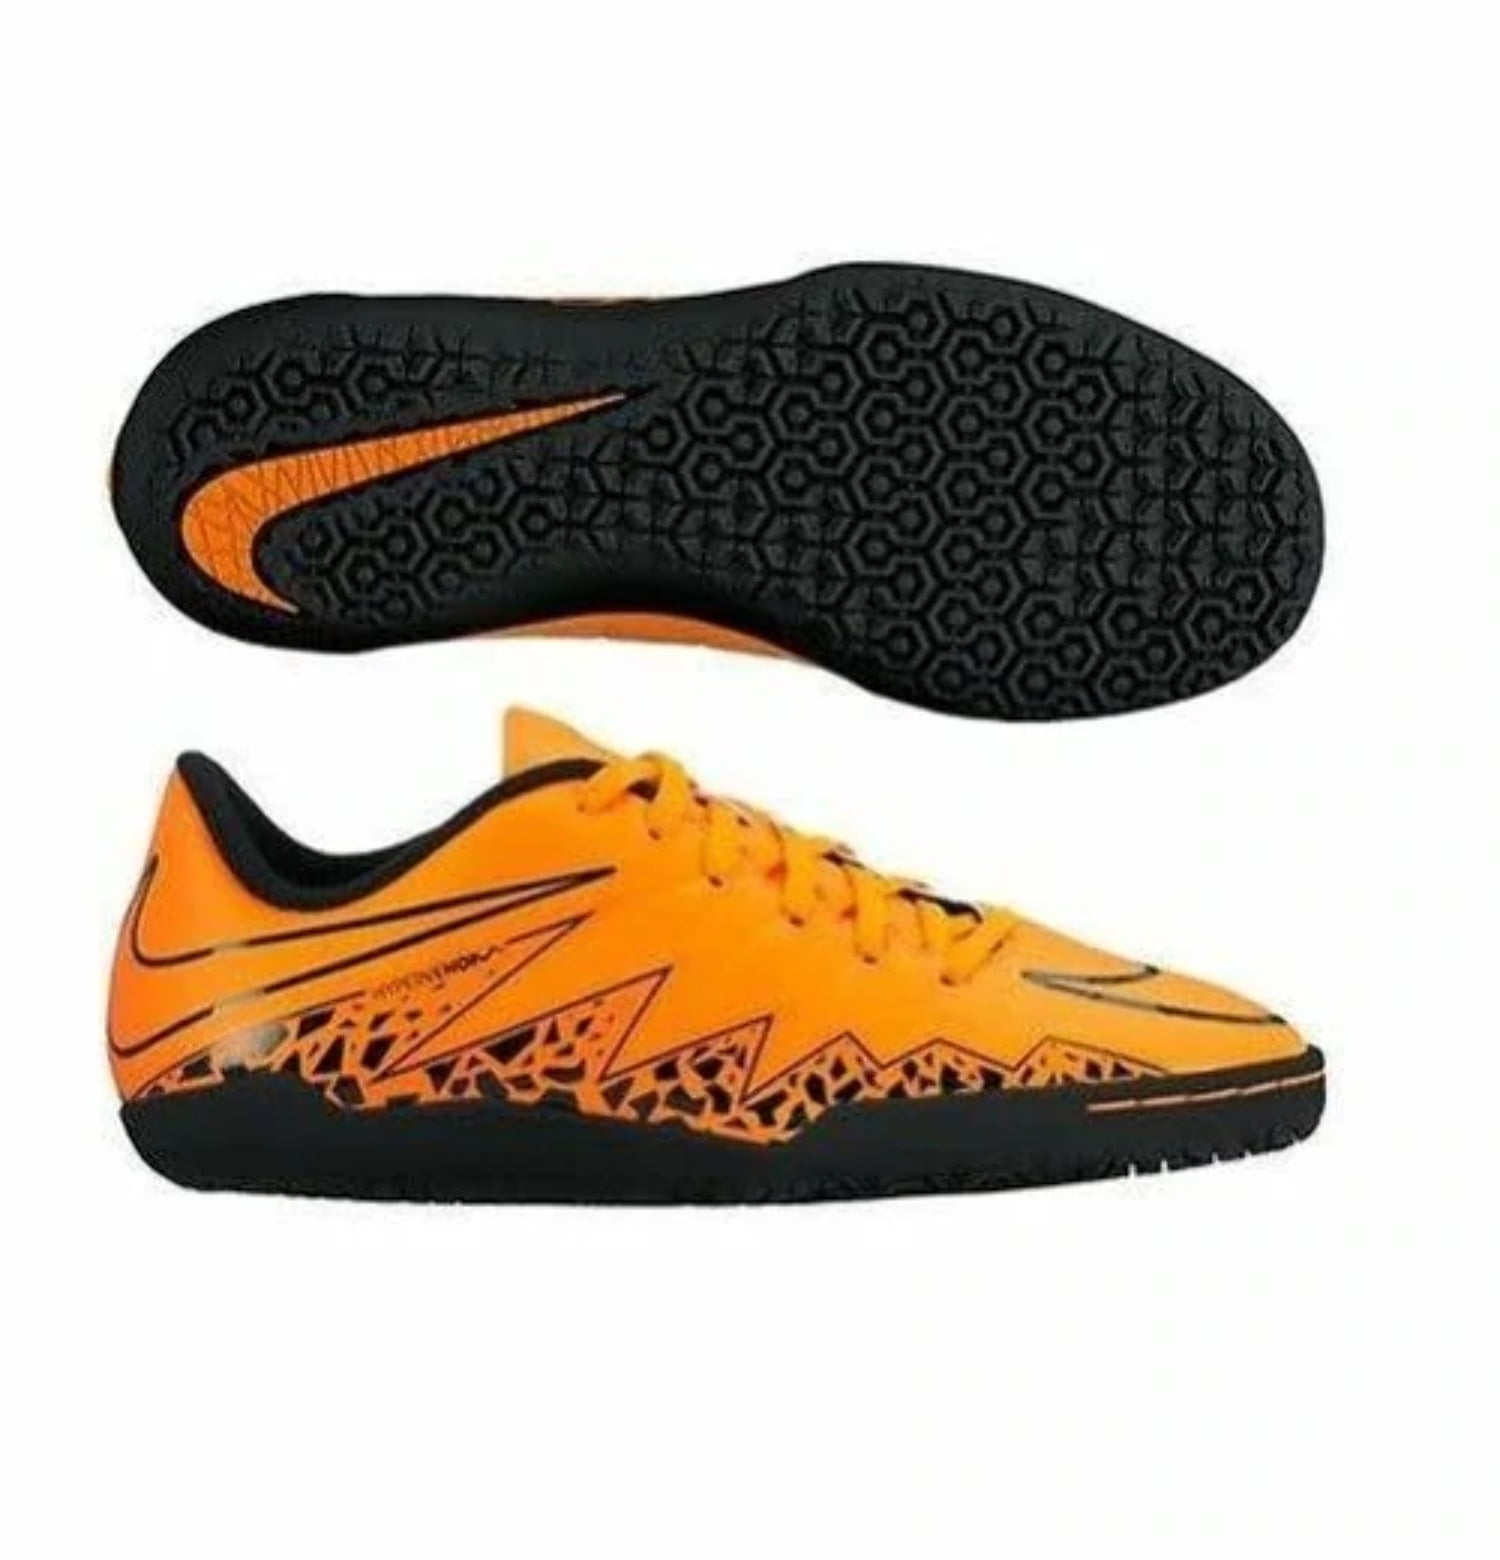 Nike Jr Hypervenom Phelon II Indoor Shoes -Orange / Black -